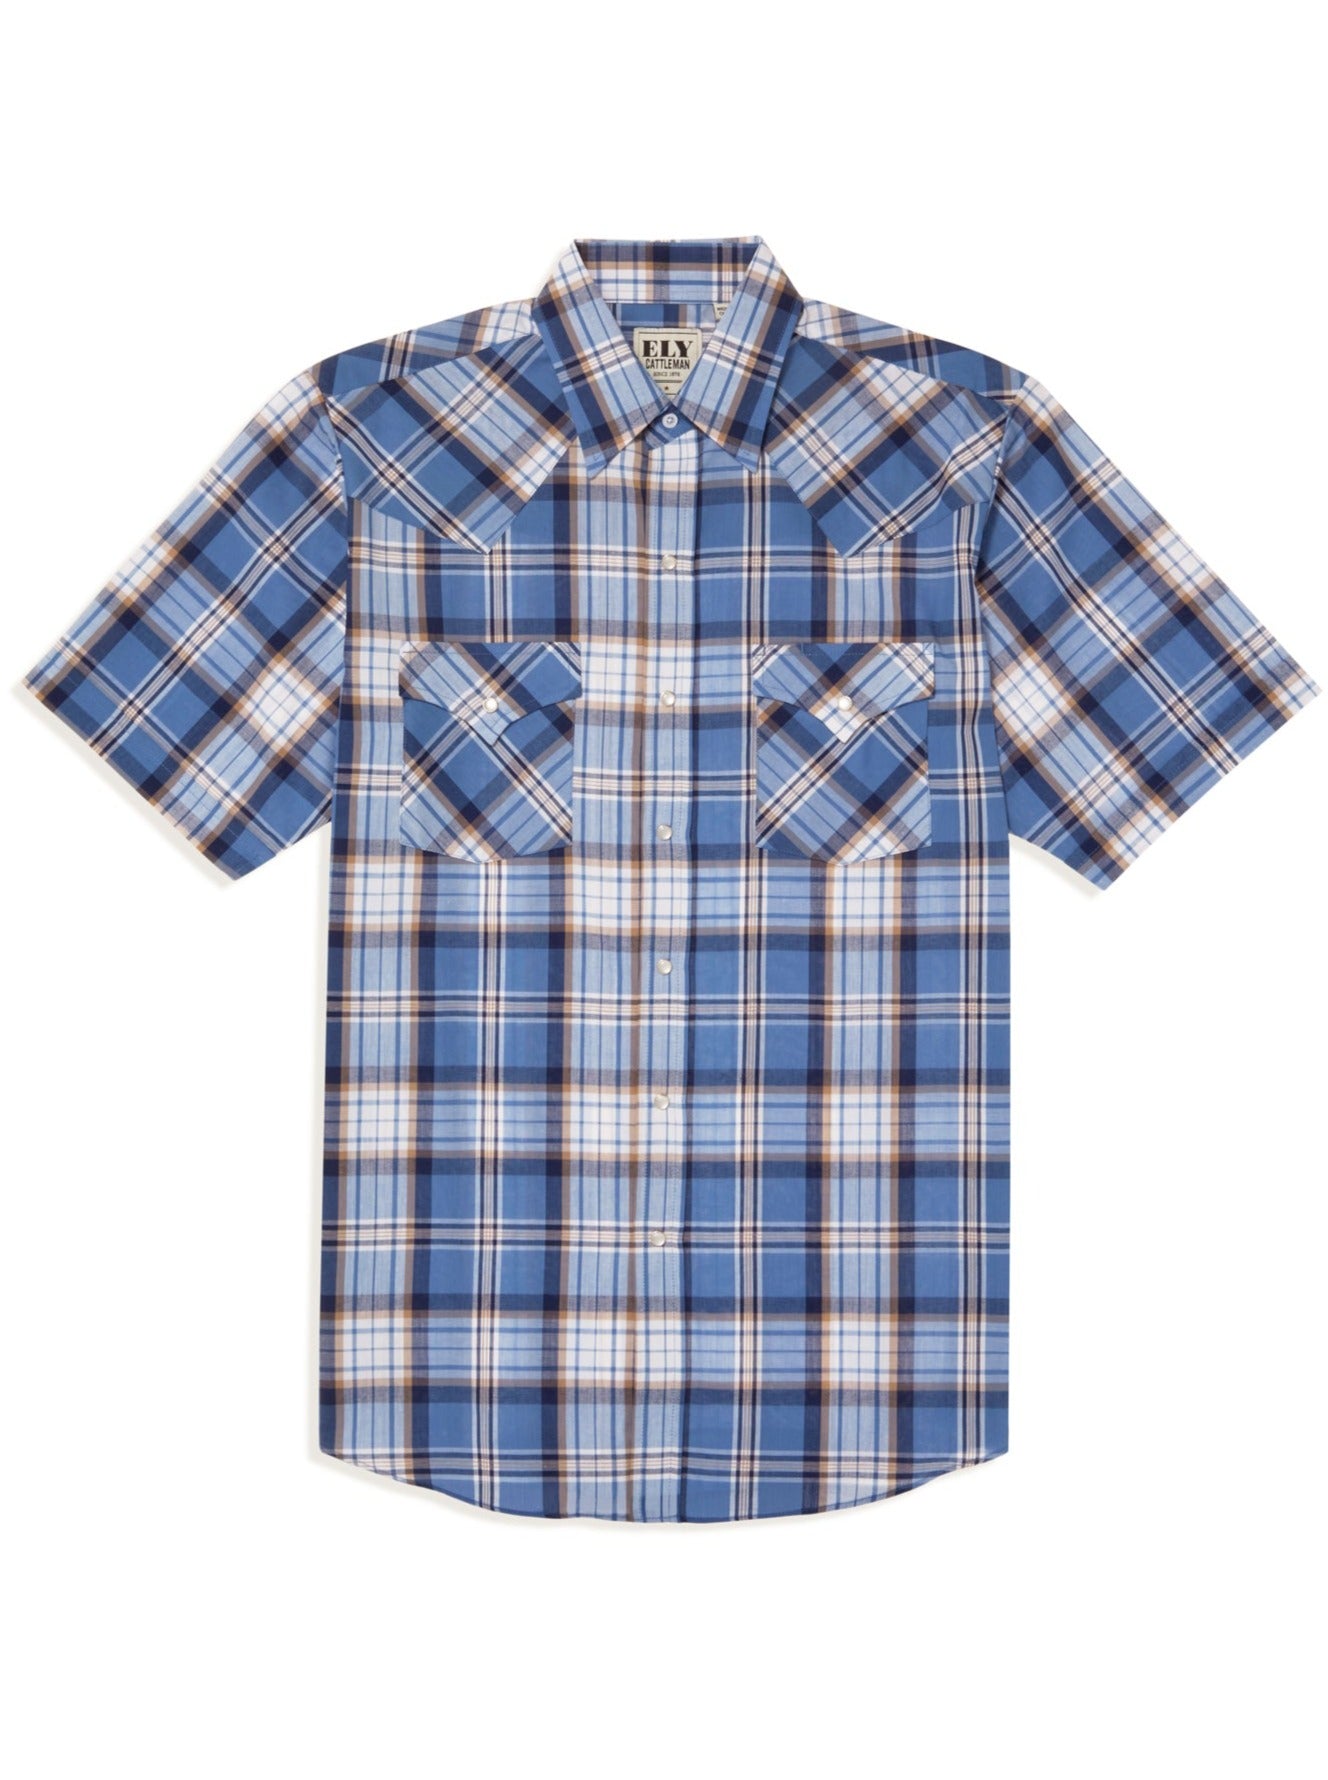 Men's Ely Cattleman Short Sleeve Textured Plaid Western Snap Shirt- Chambray Blue